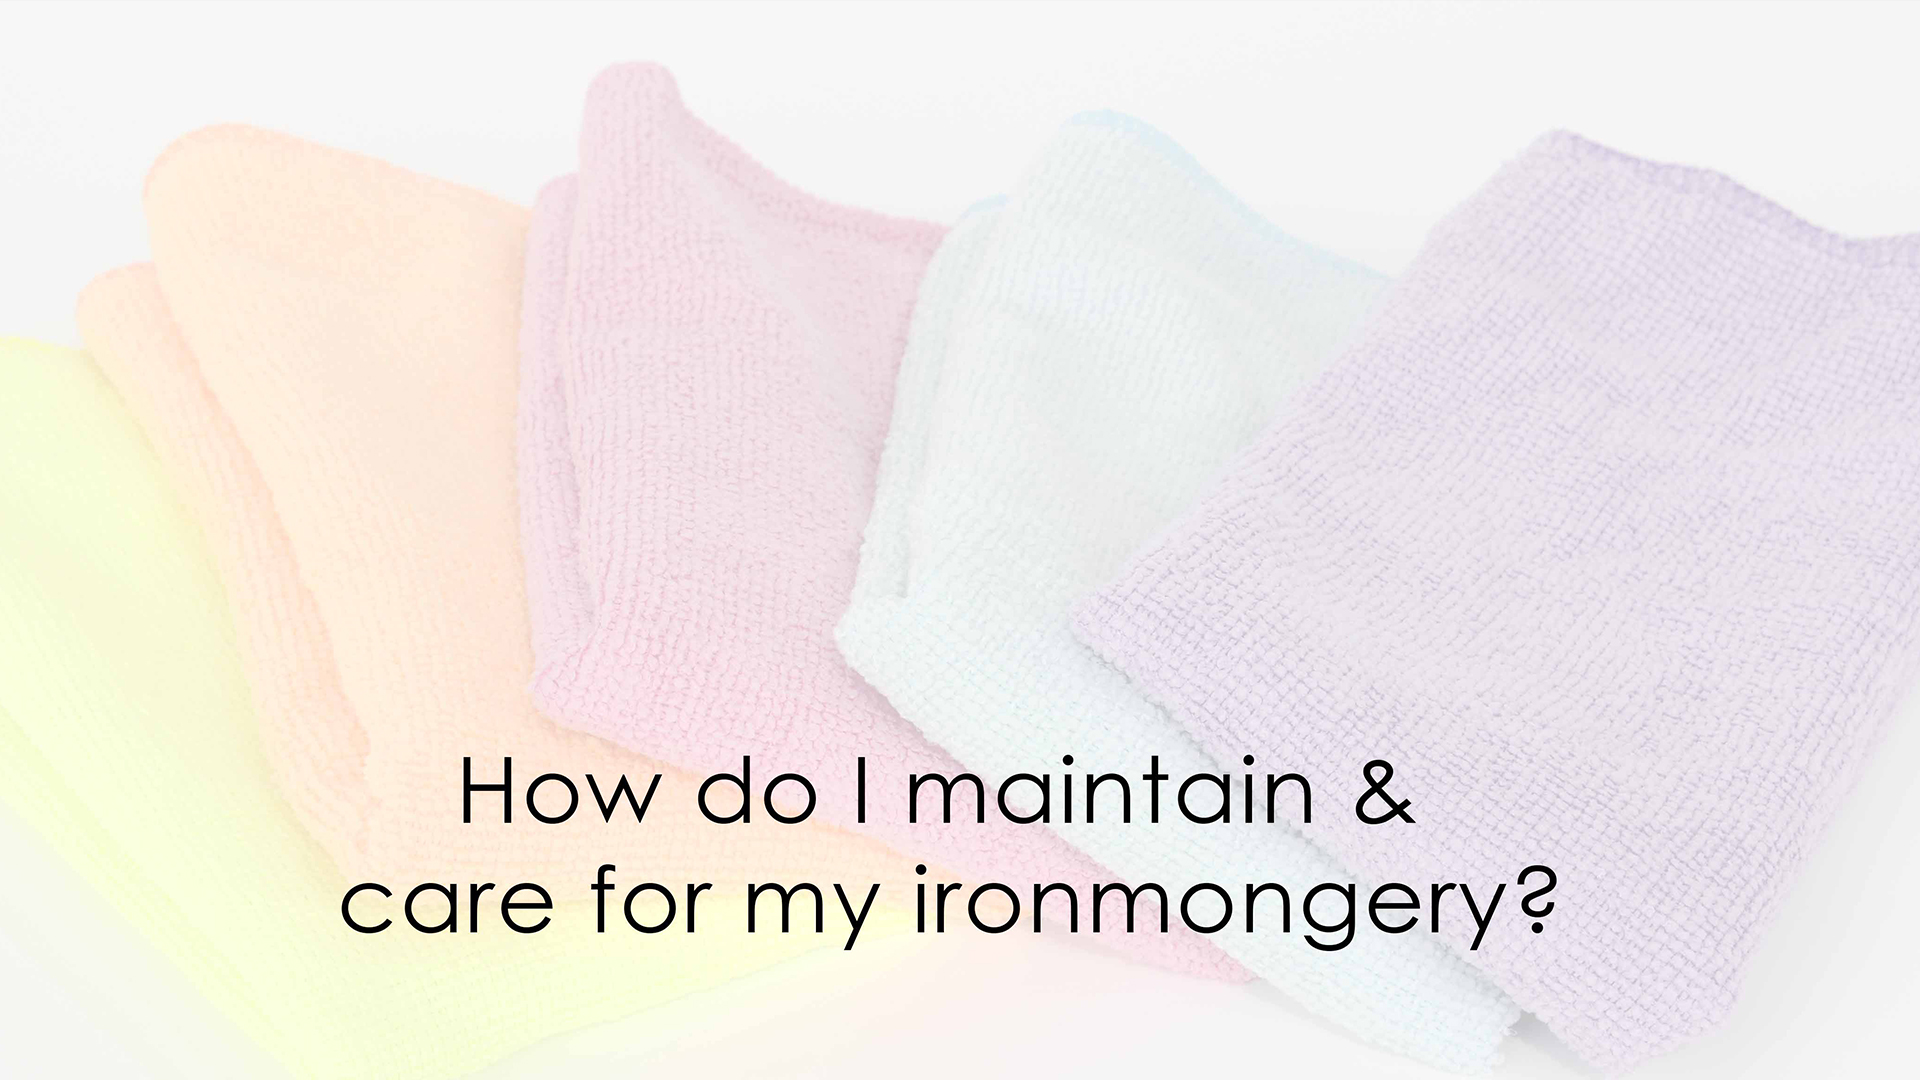 How do I maintain & care for my ironmongery?